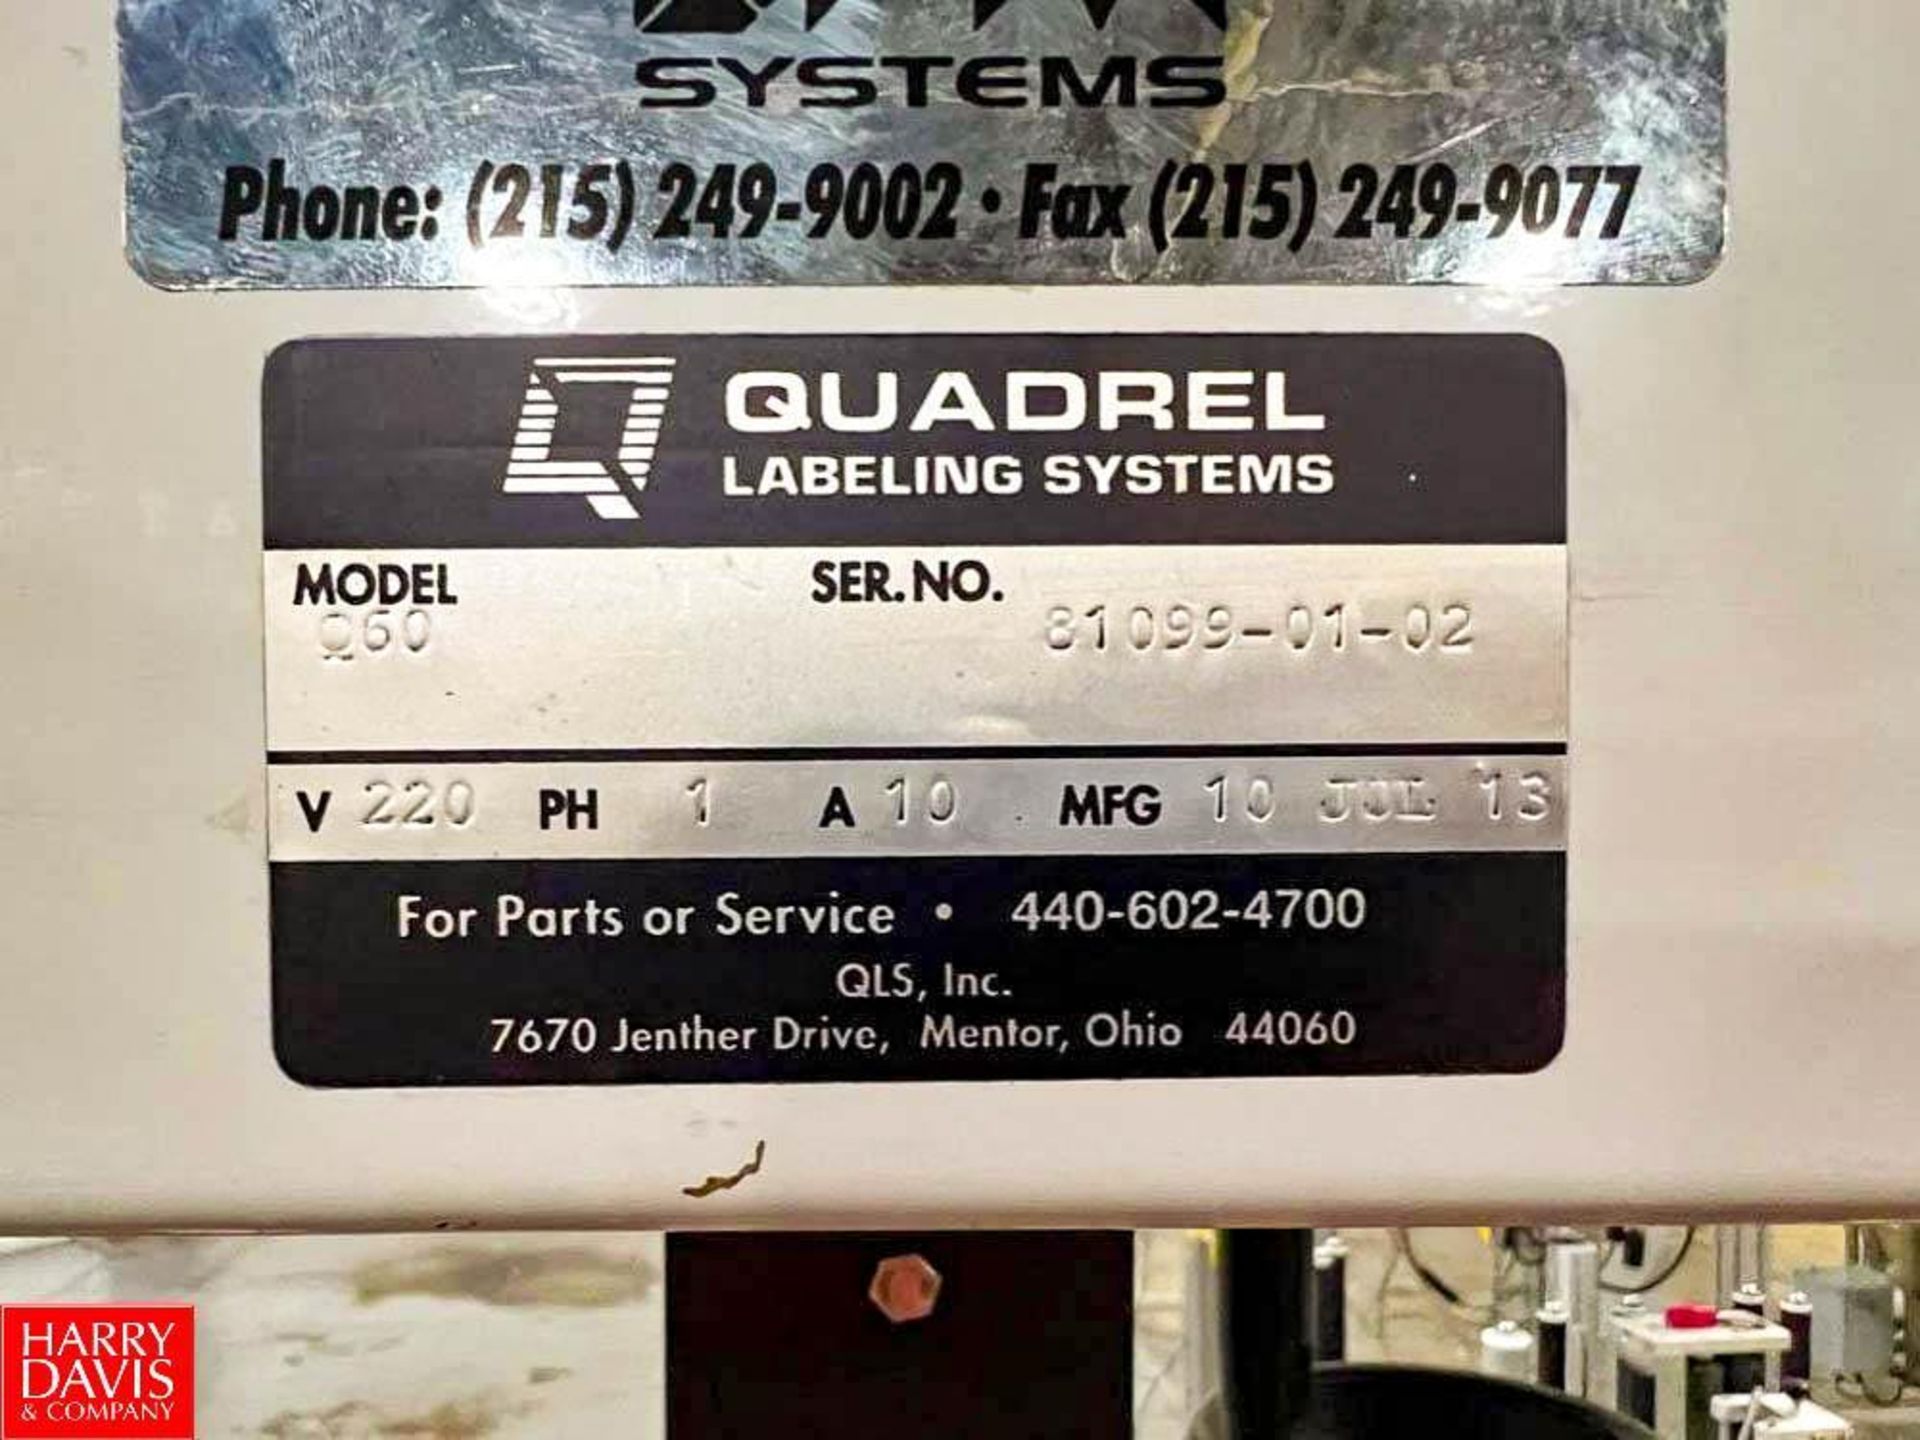 2013 Quadrel Labeling Systems S/S Framed Labeler, Model: Q60, S/N: 81099-01-02 with (2) Digital Read - Image 2 of 2